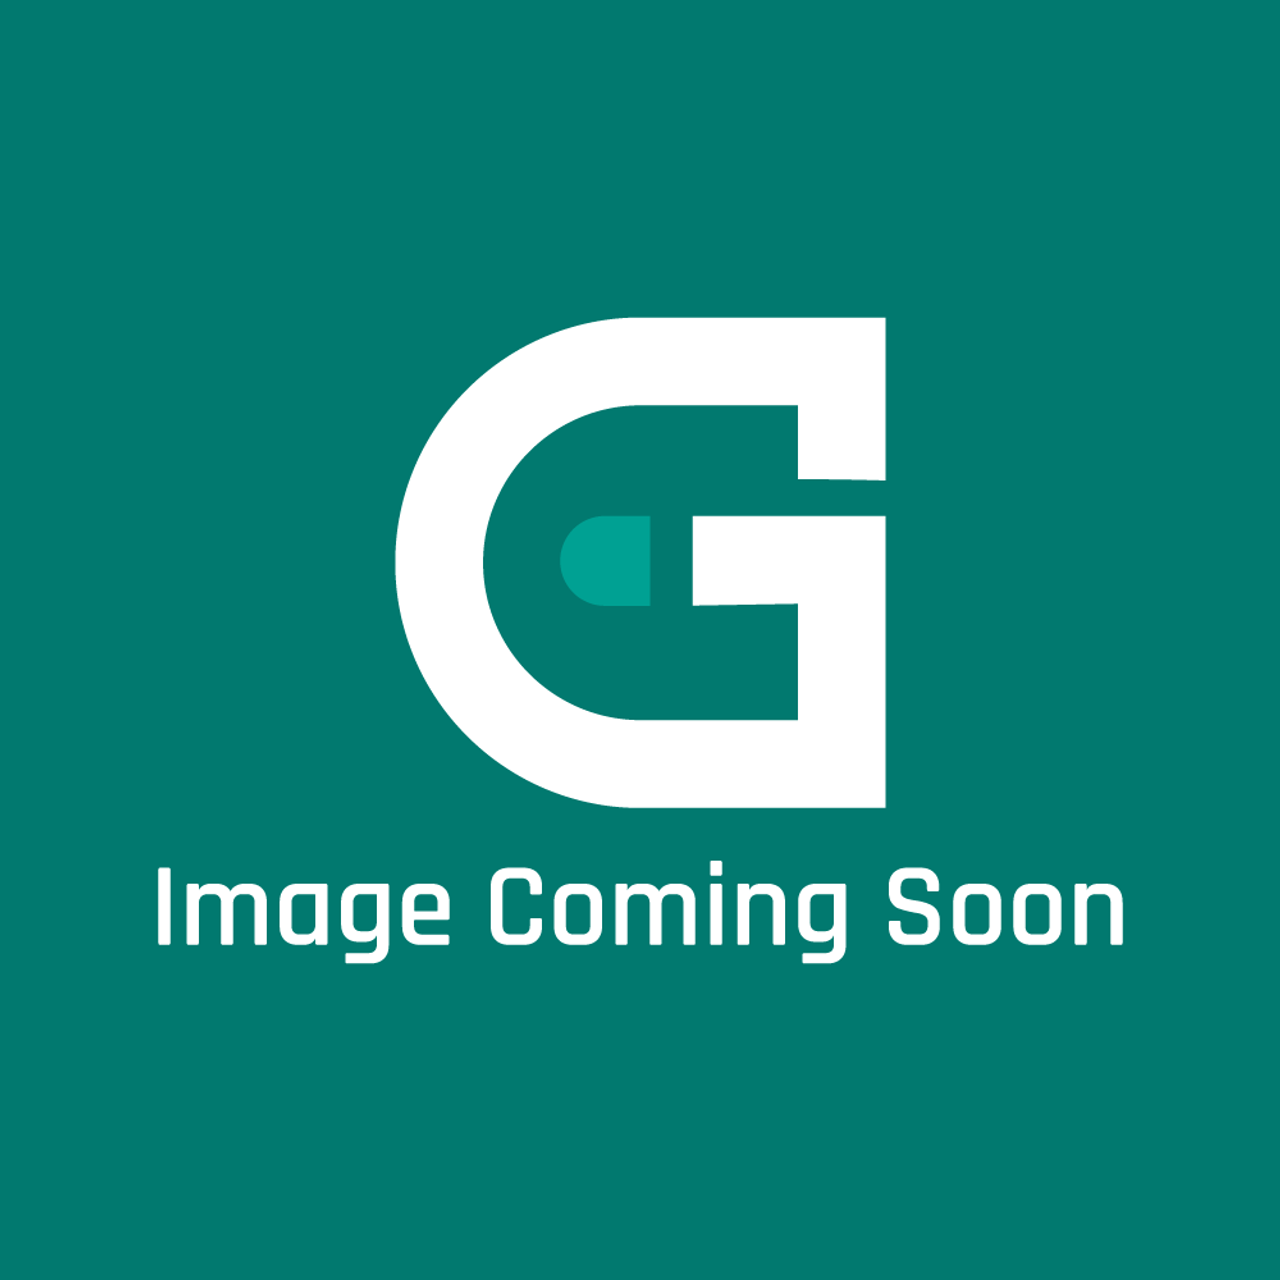 Groen 145182 - Plate-Adapter Winsmith T O Sew Eurodrive 1 1/2 Hp - Image Coming Soon!